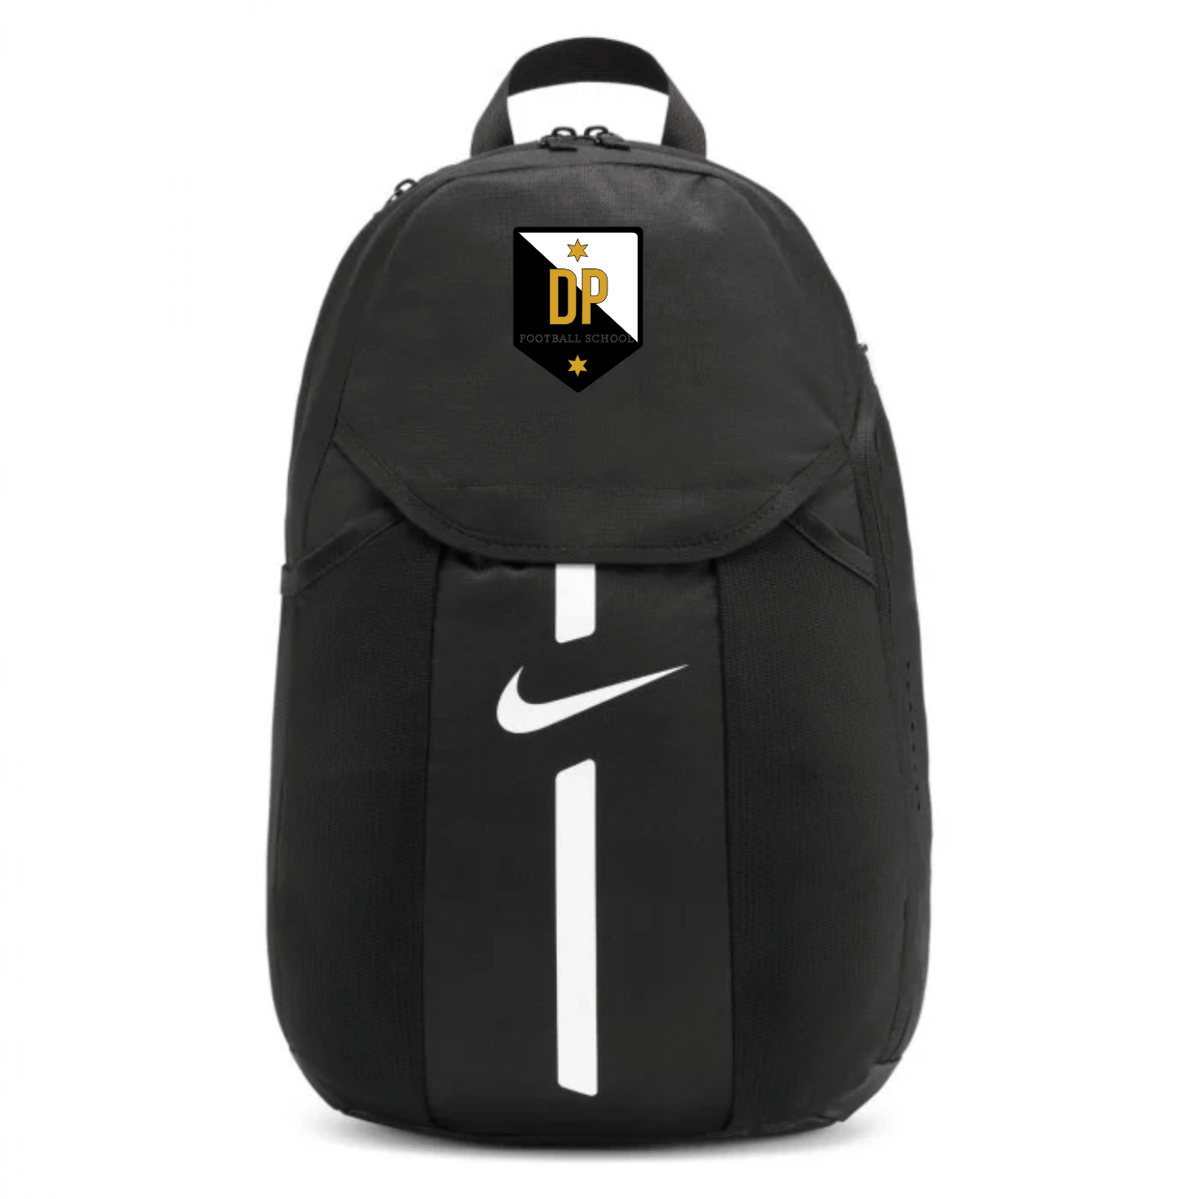 DP Academy - Academy Backpack